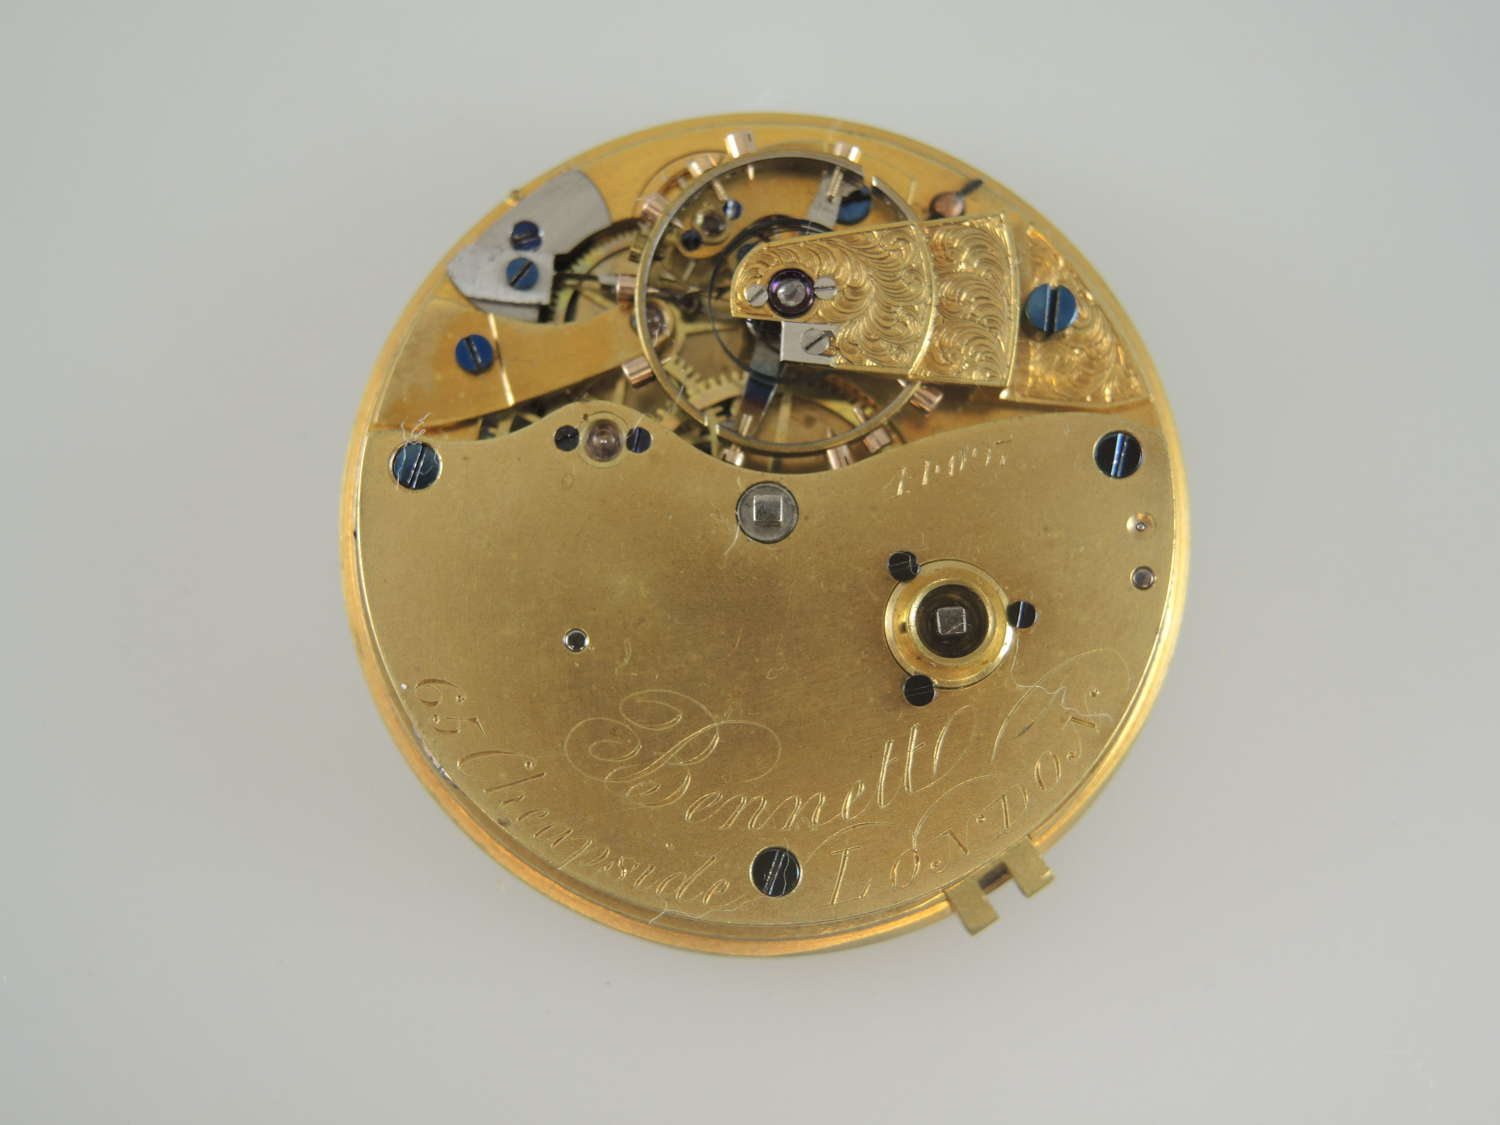 Spring detent chronometer pocket watch movement by Bennett c1880